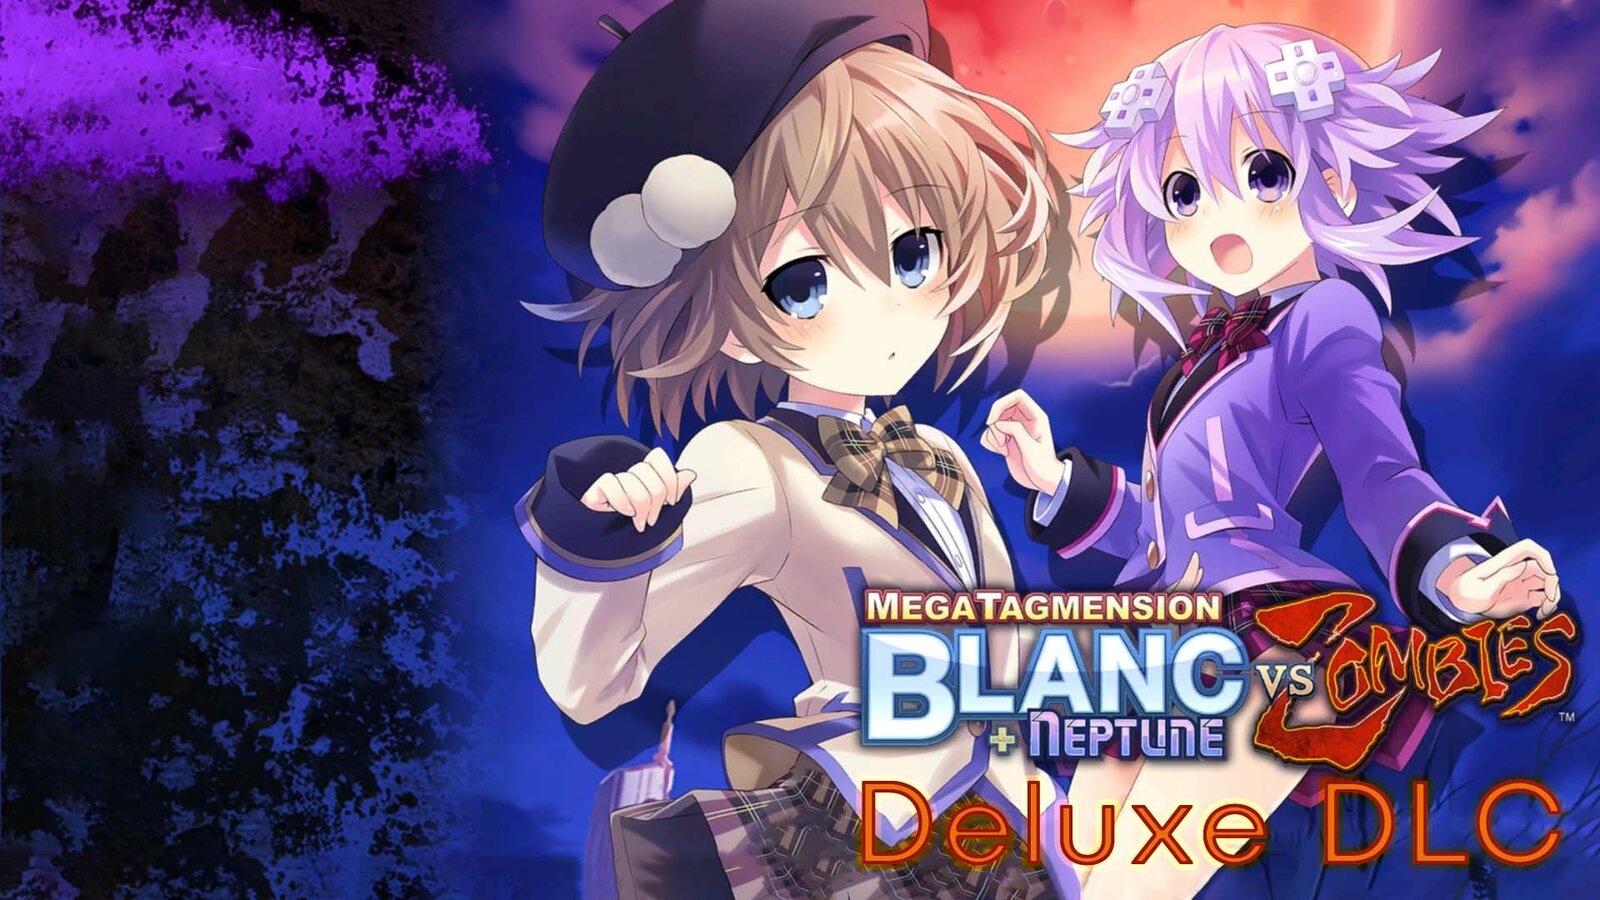 MegaTagmension Blanc + Neptune VS Zombies - Deluxe Pack